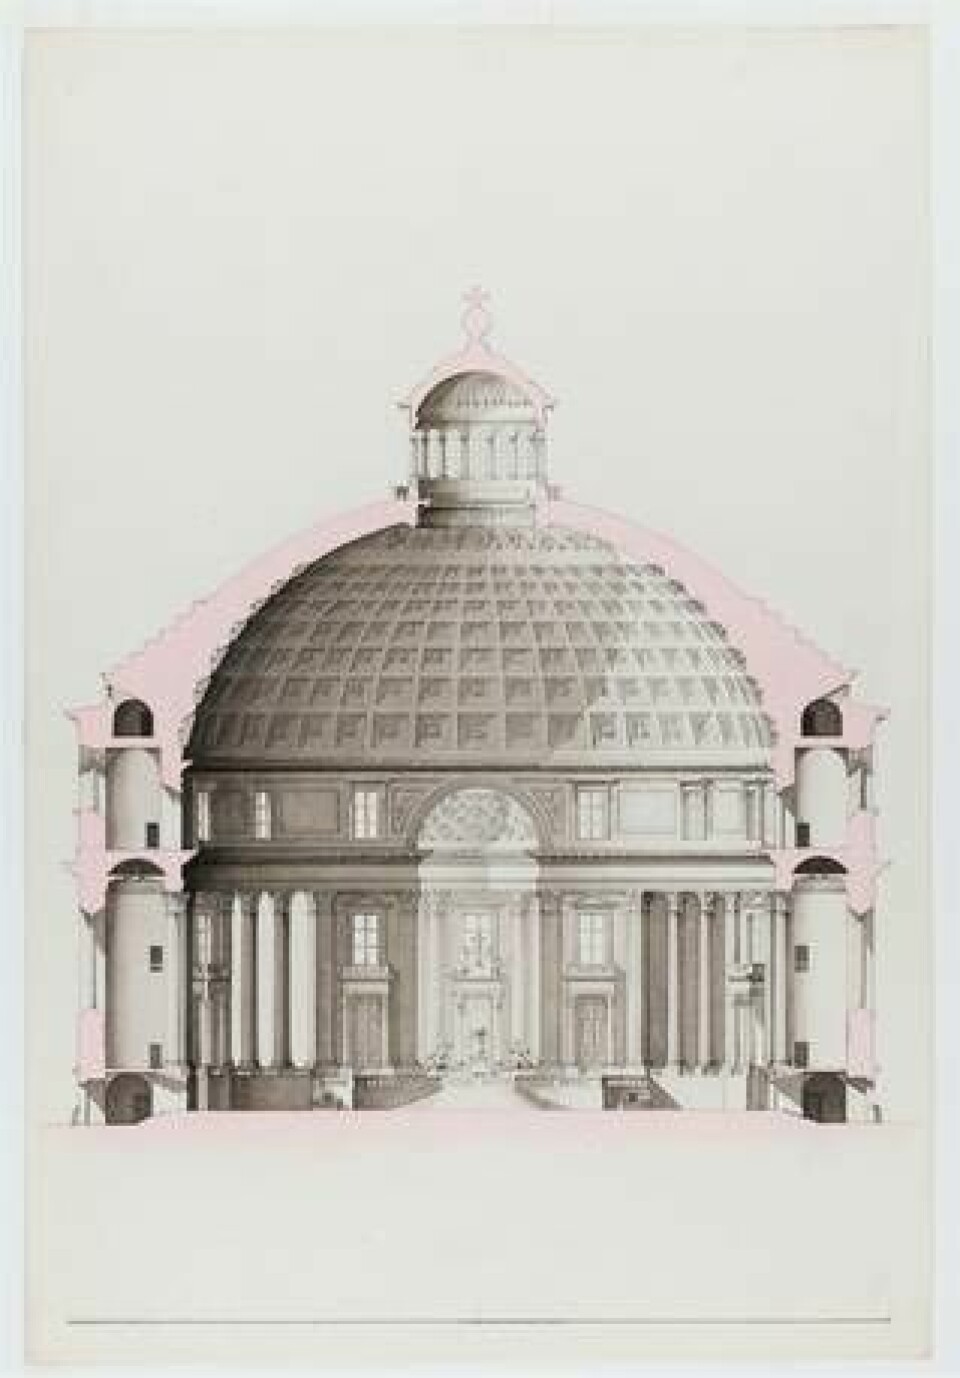 Arkitekten Erik Palmstedts vision om hur Stockholms Panteon skulle se ut, i en ritning från 1791. Foto: Konstakademien/Björn Strömfeldt